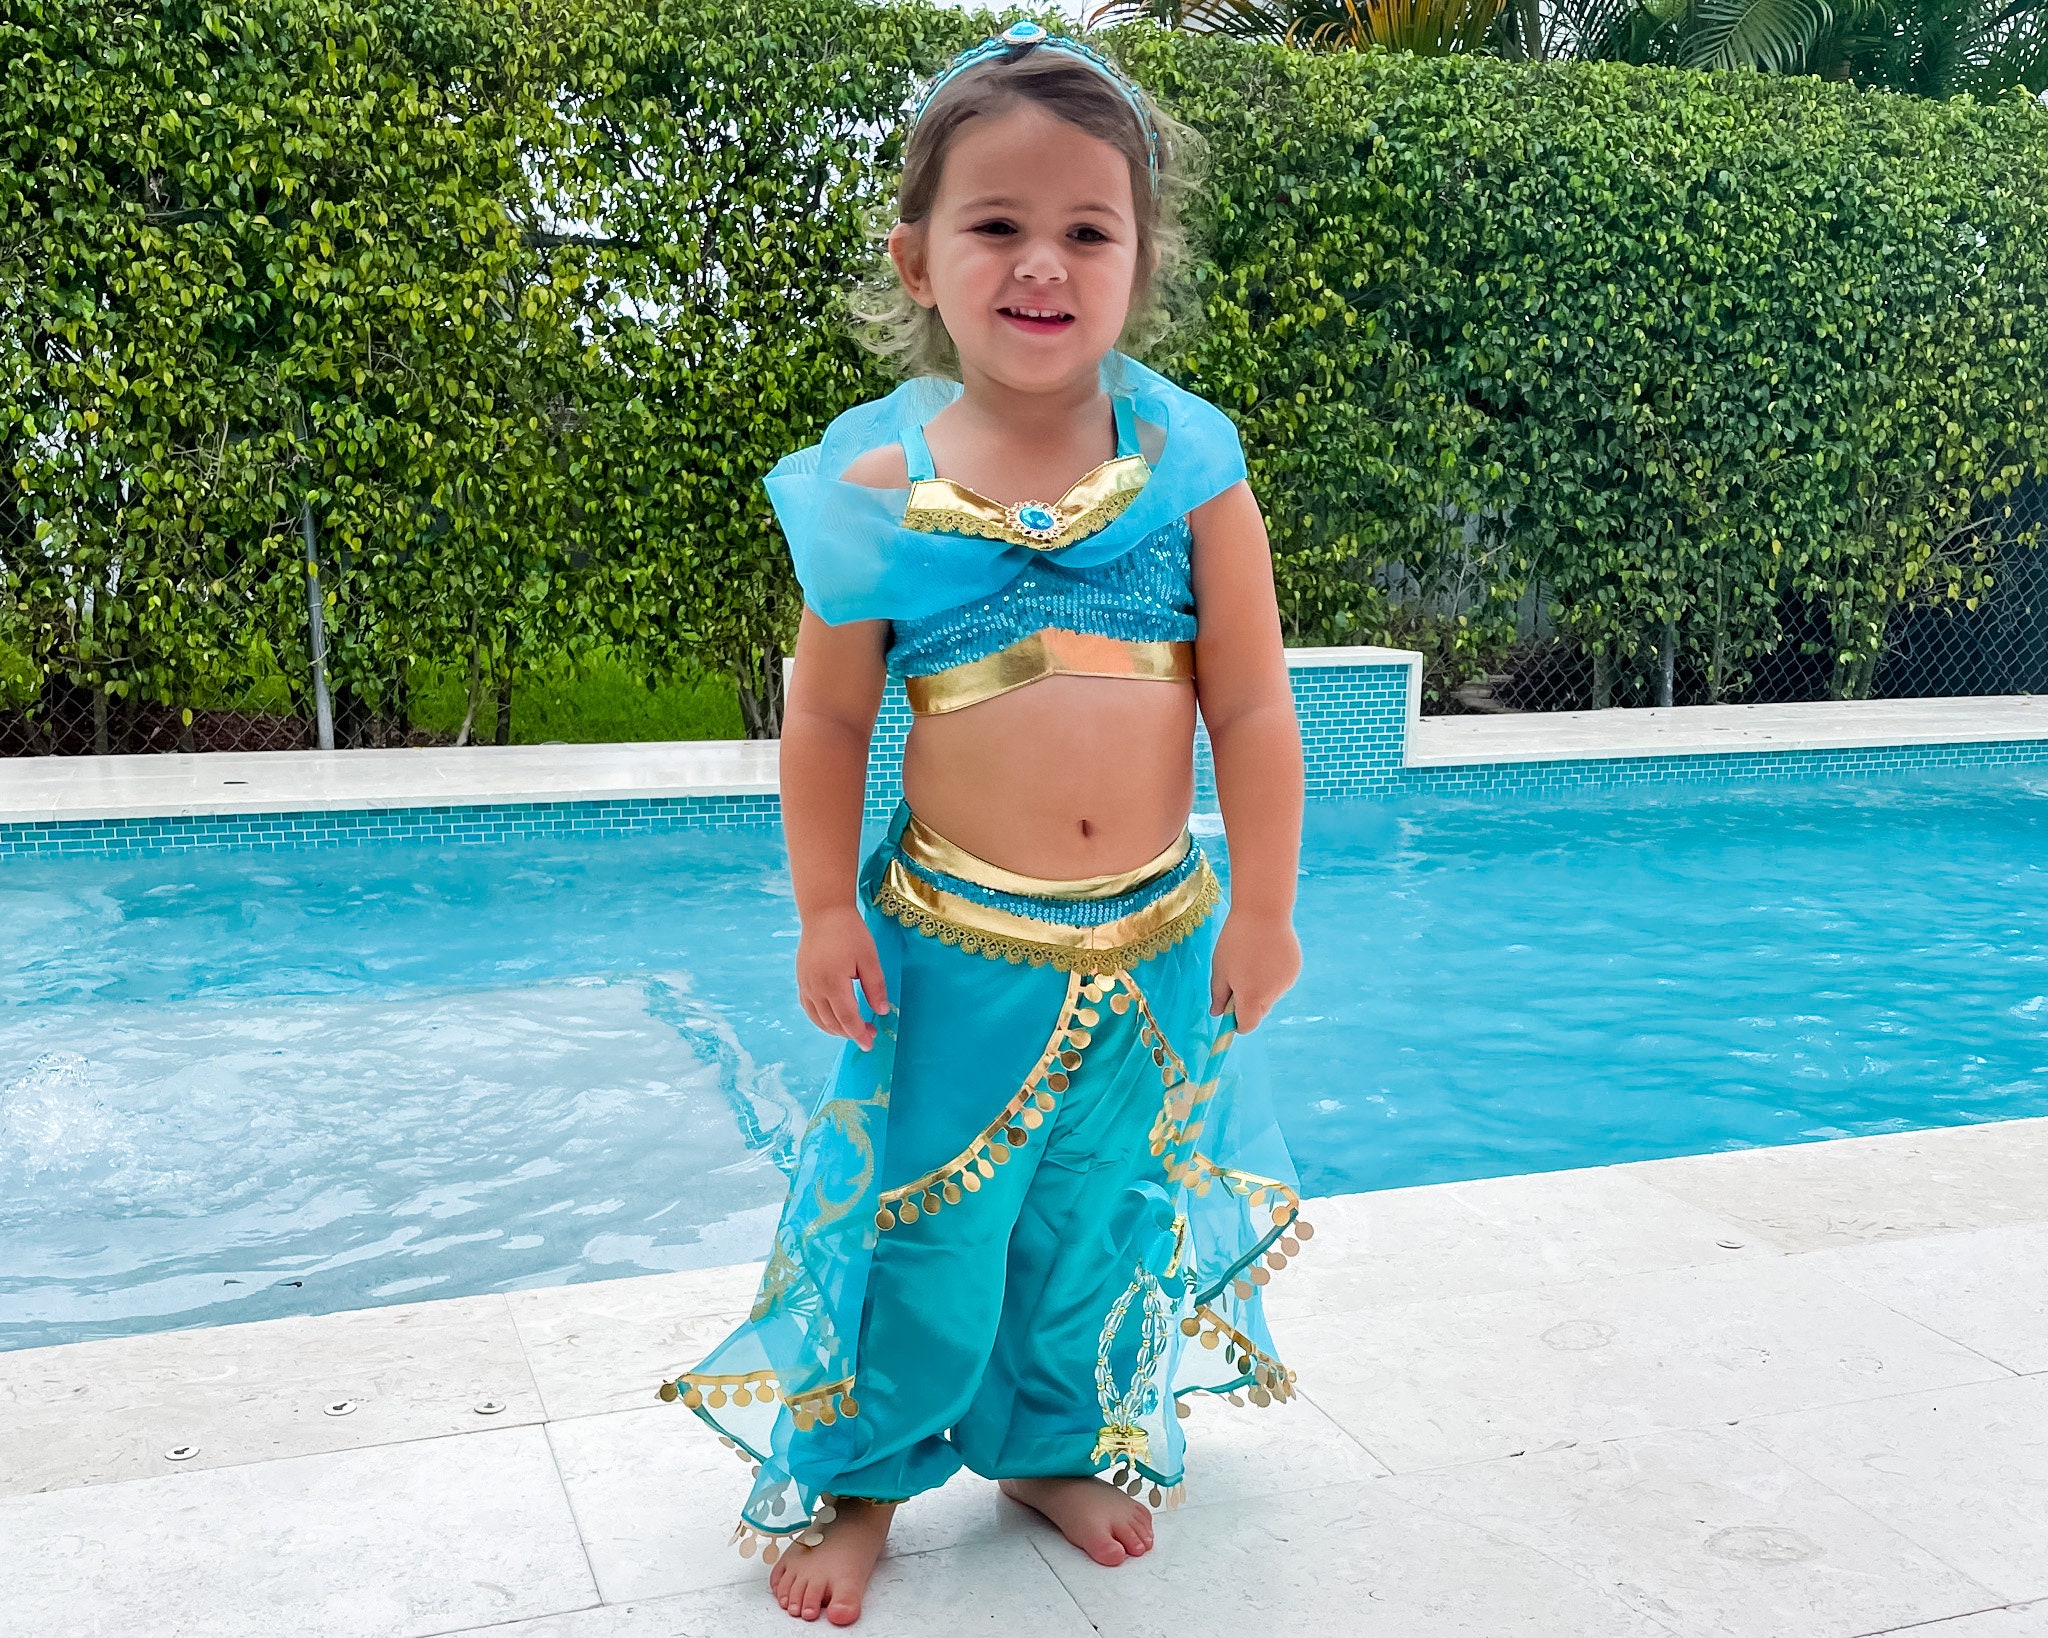 Aladdin Jasmine Teal Deluxe Toddler Costume